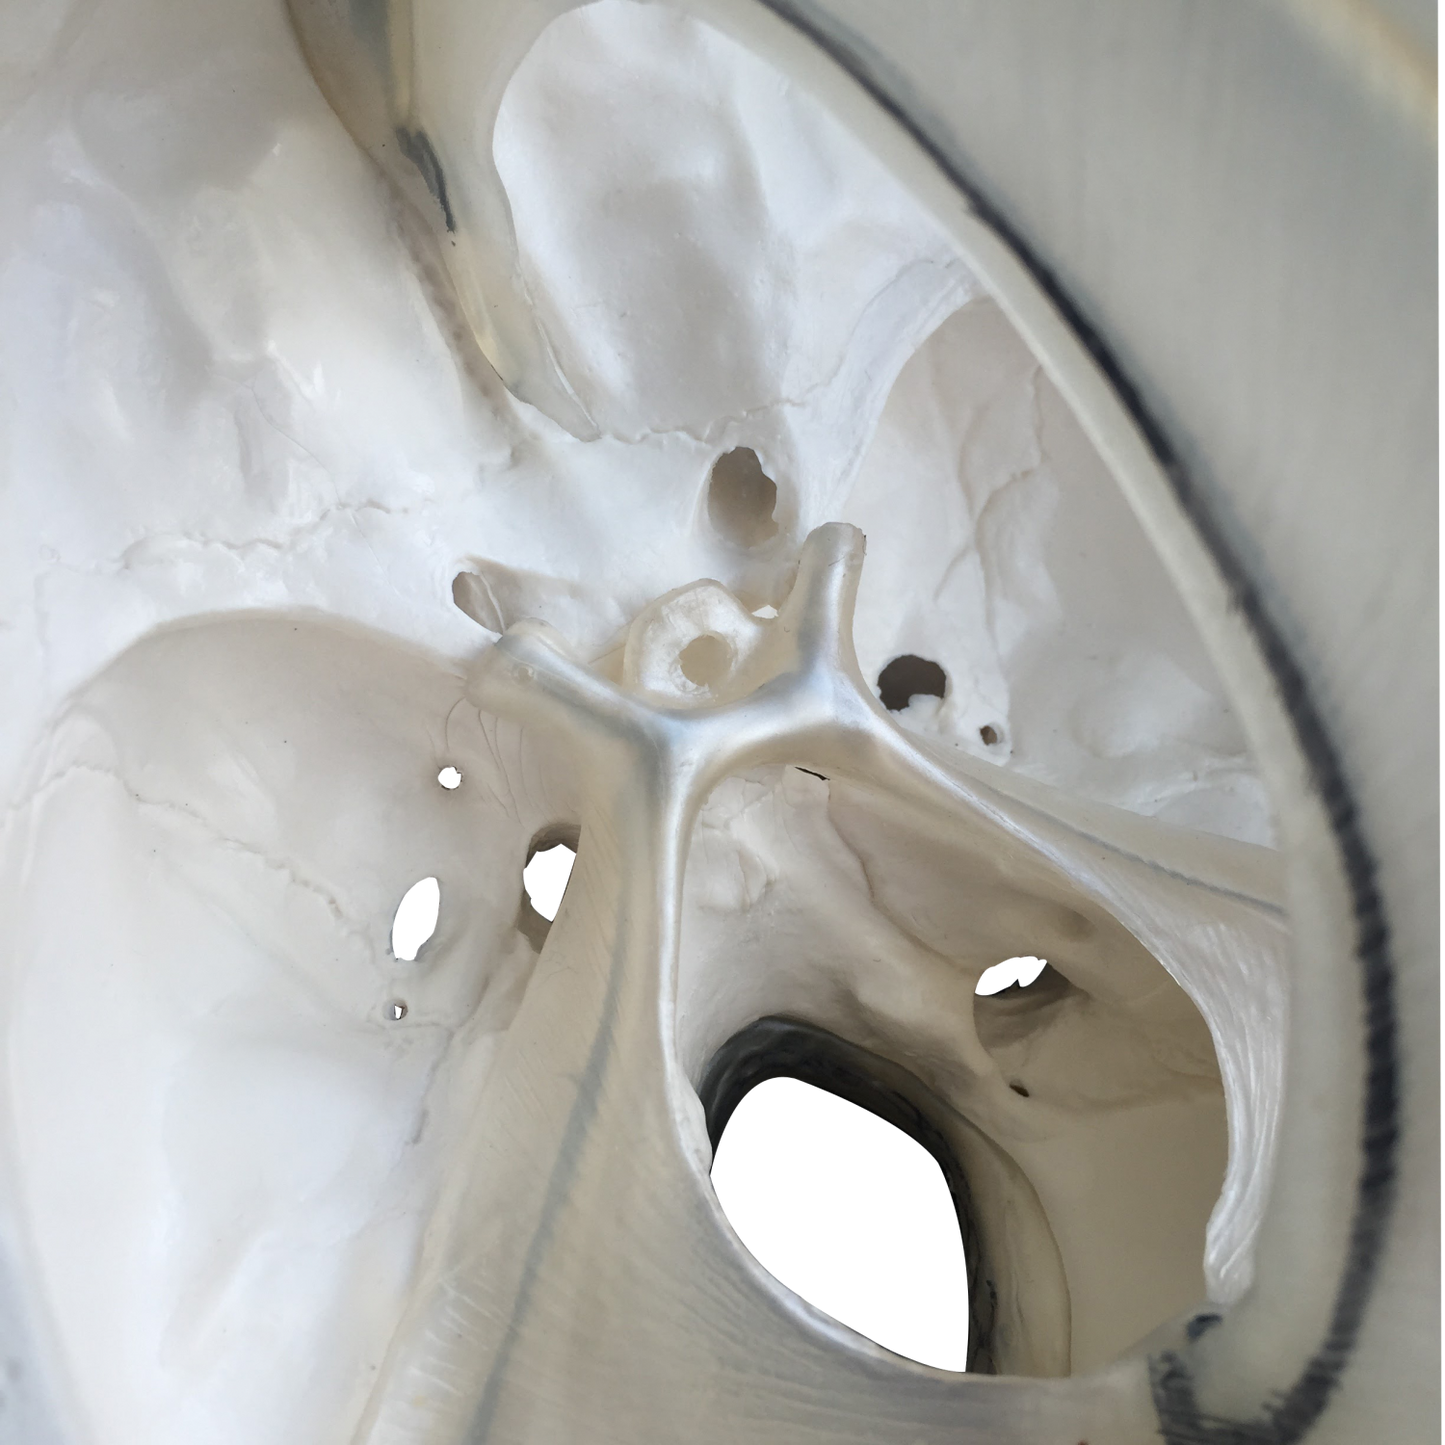 Skull model Incl. the dural septa e.g. falx cerebri from dura mater